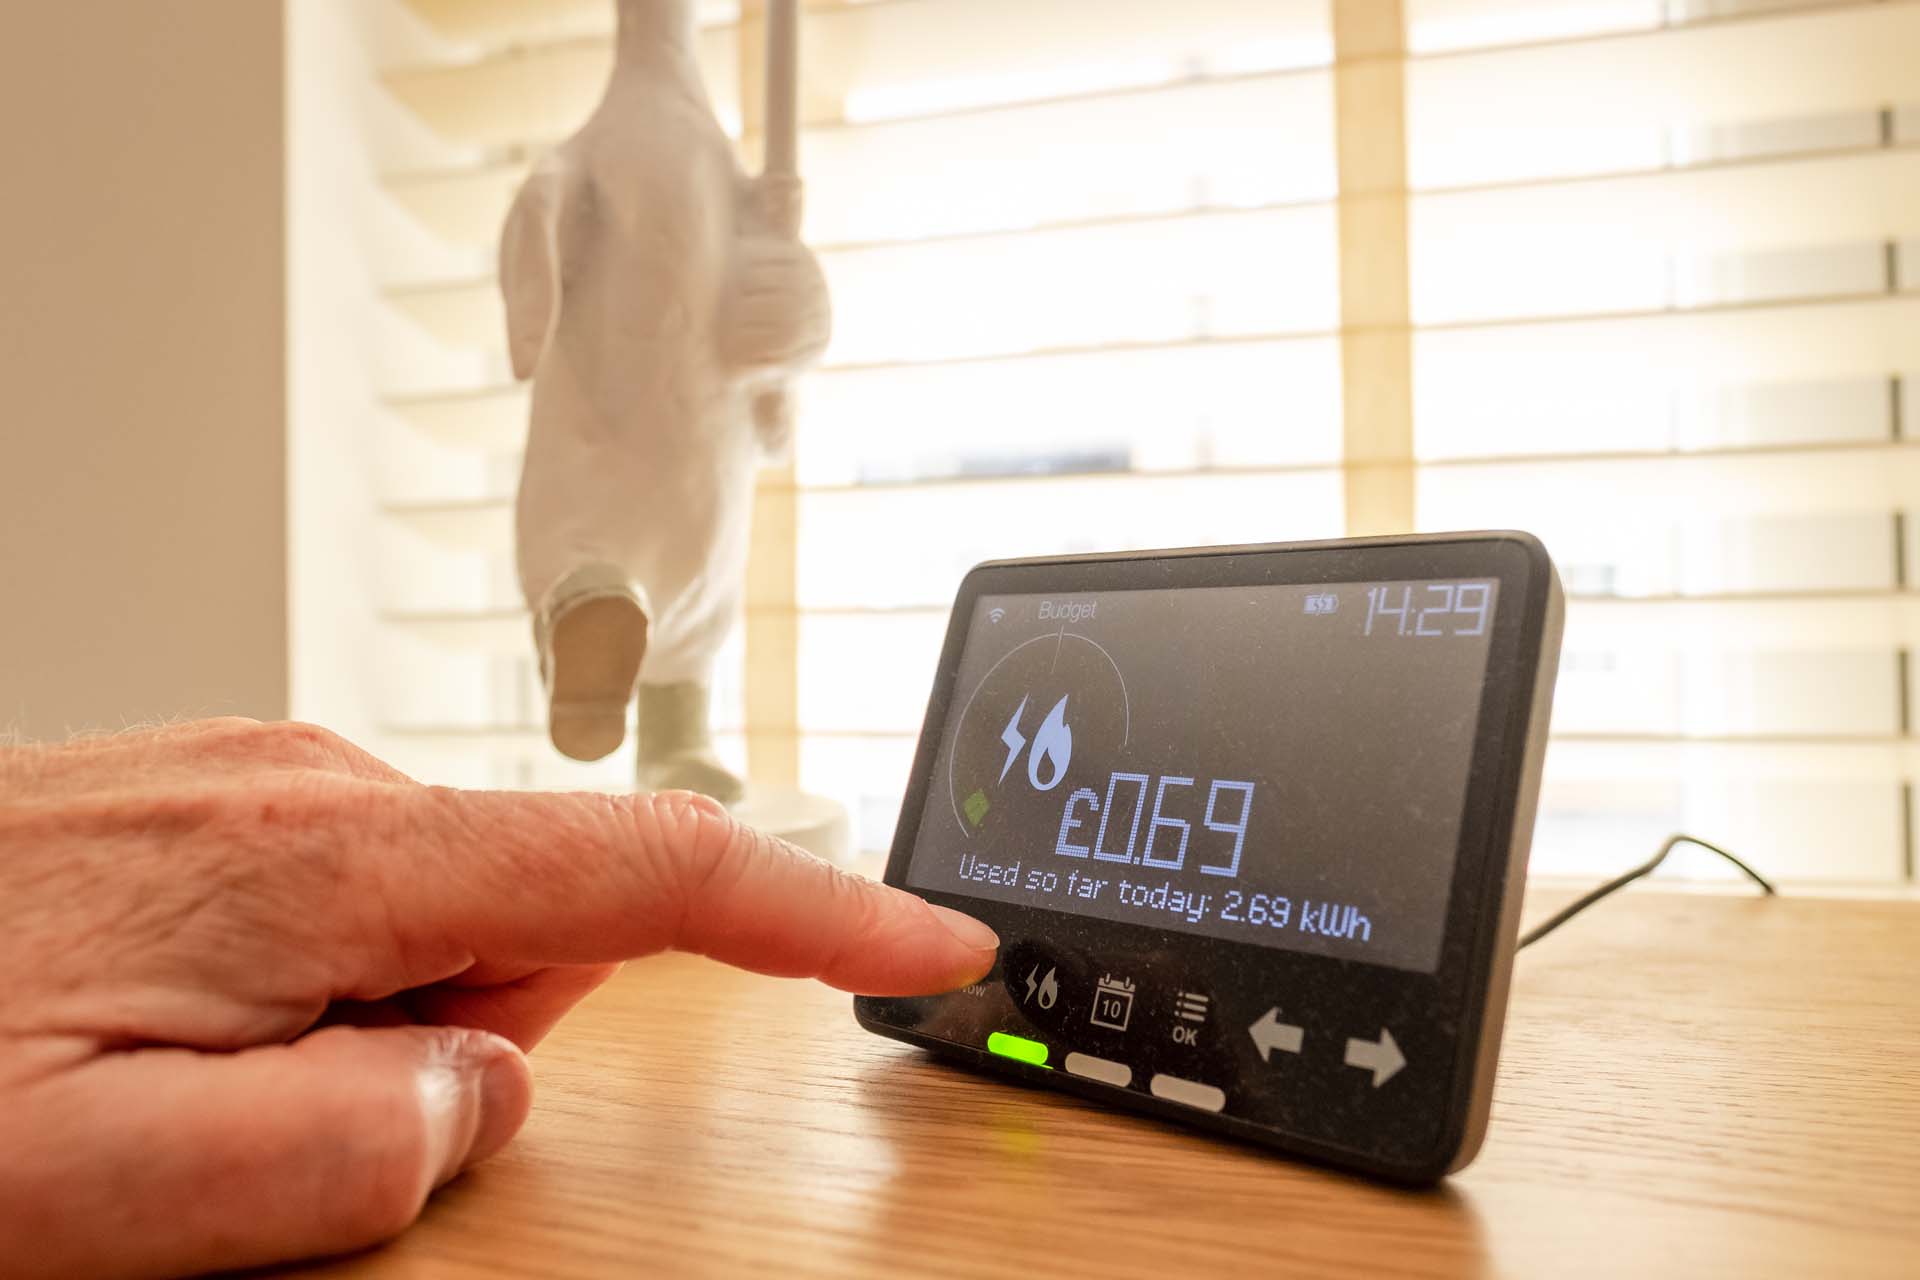 Hand pressing screen of a smart meter